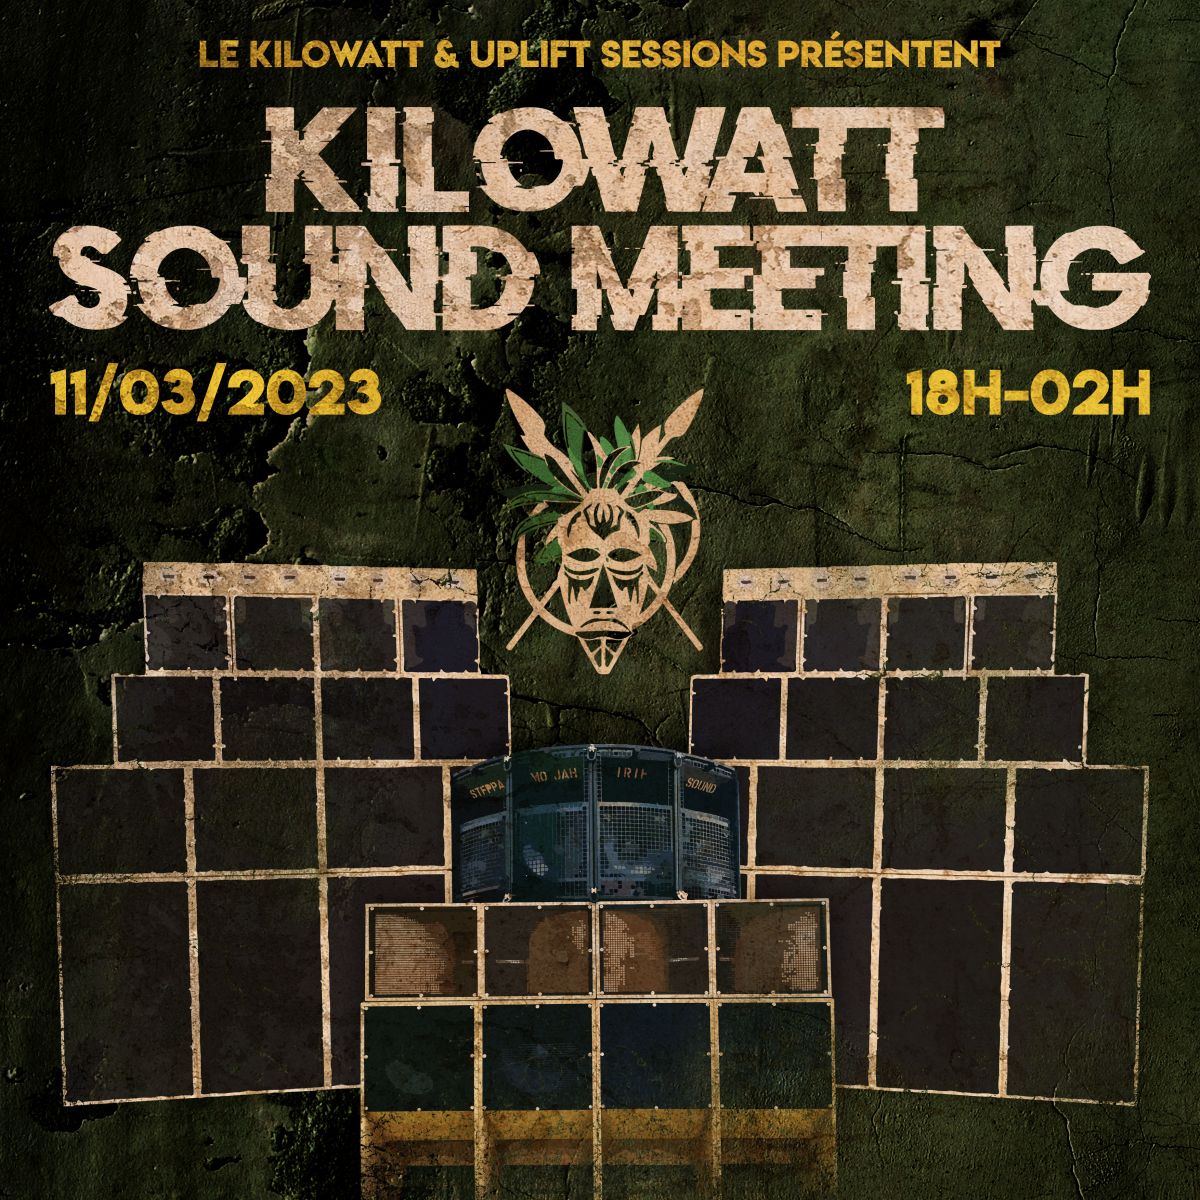 KILOWATT SOUND MEETING